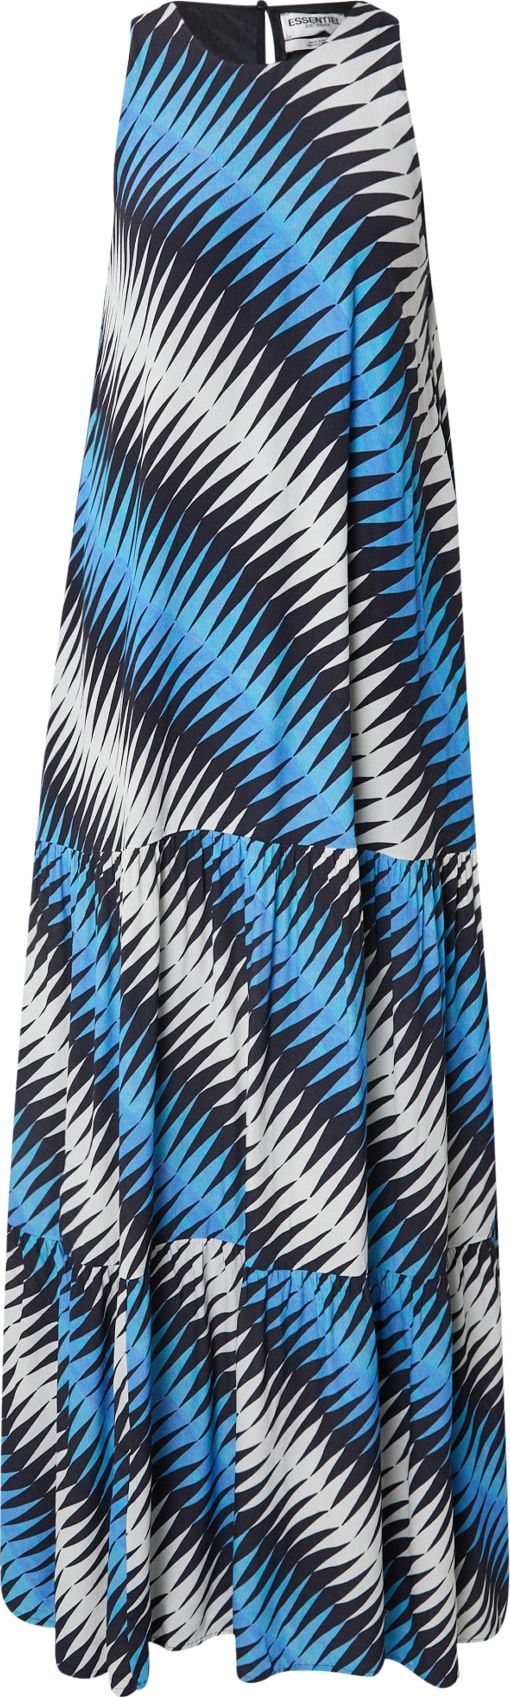 Essentiel Antwerp Letní šaty 'Zuwu' modrá / bílá / černá